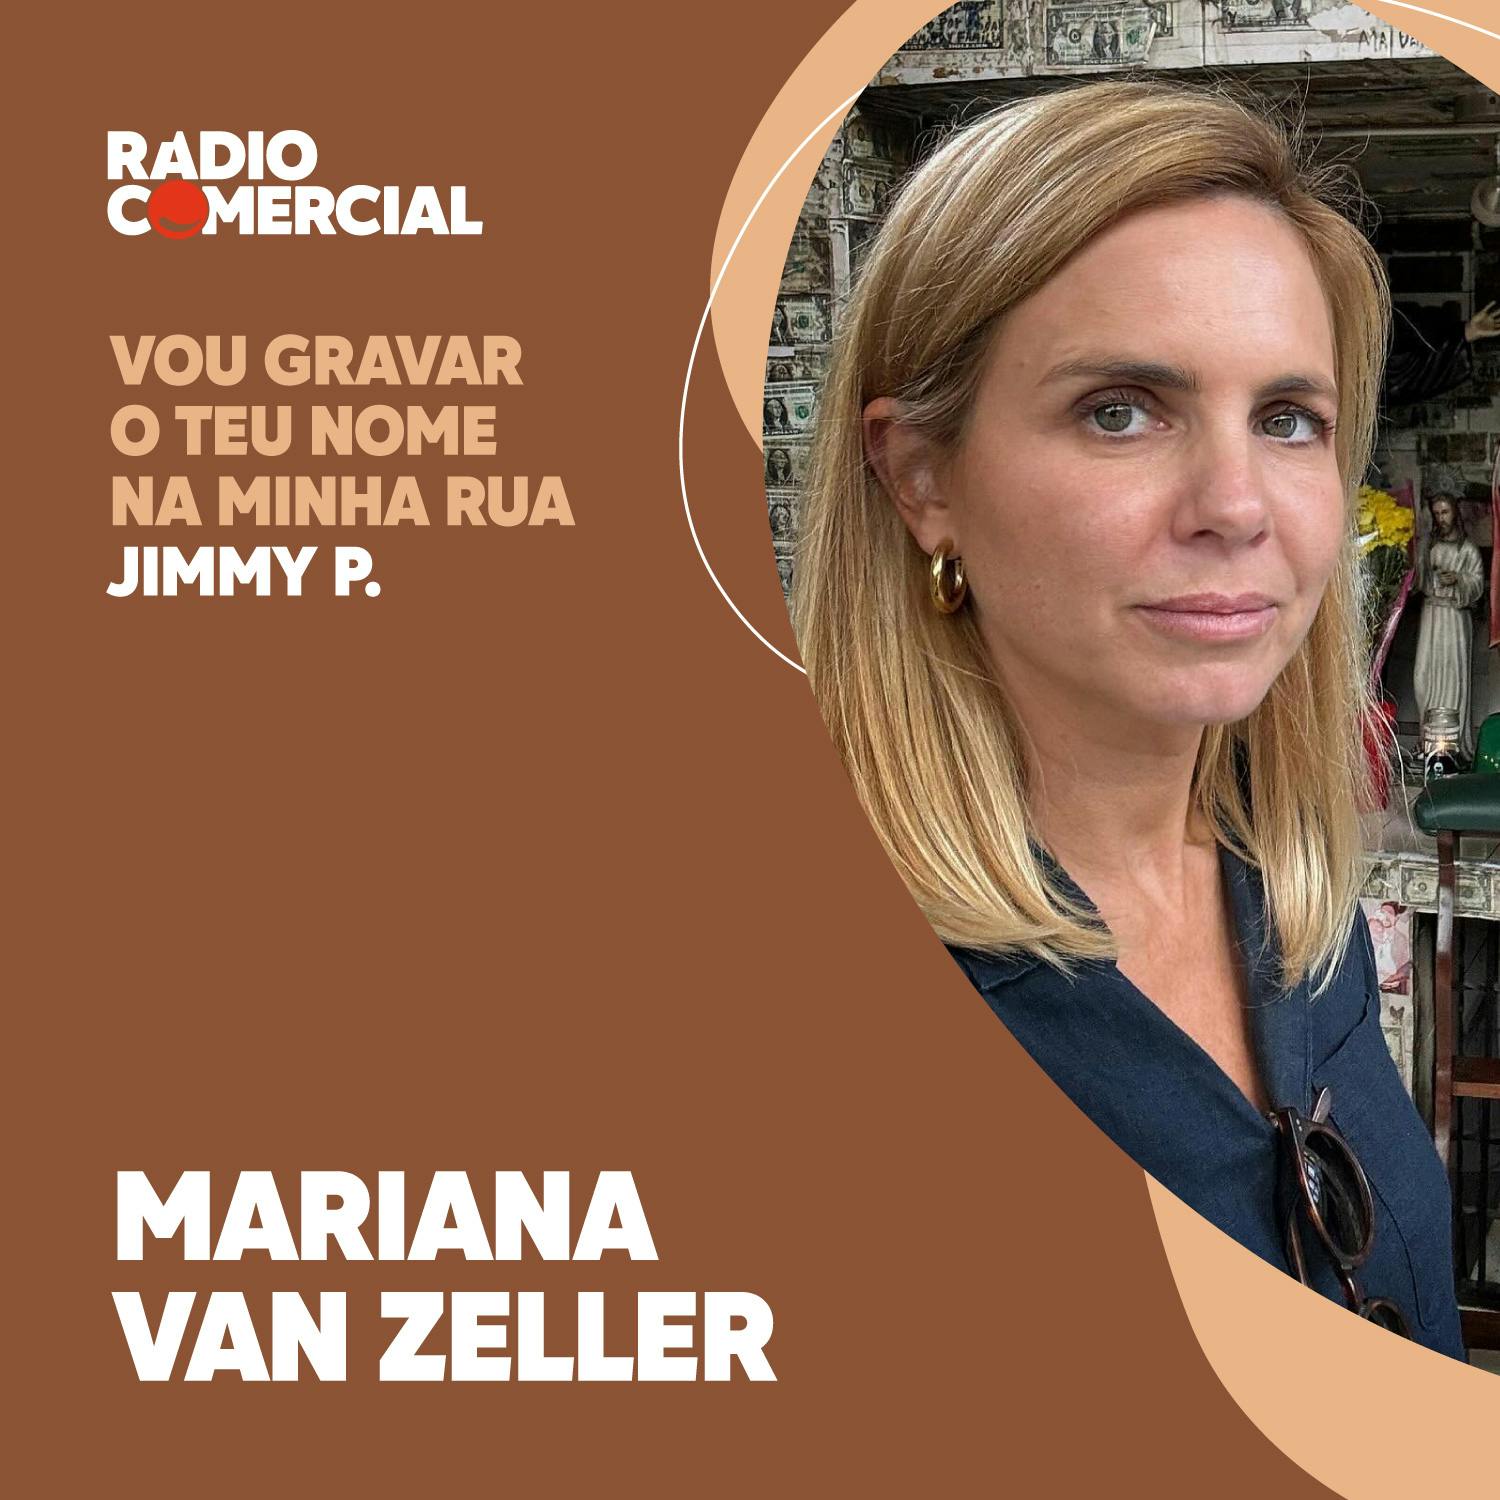 Mariana Van Zeller: “Eu punha nomes de mães pelas ruas todas”